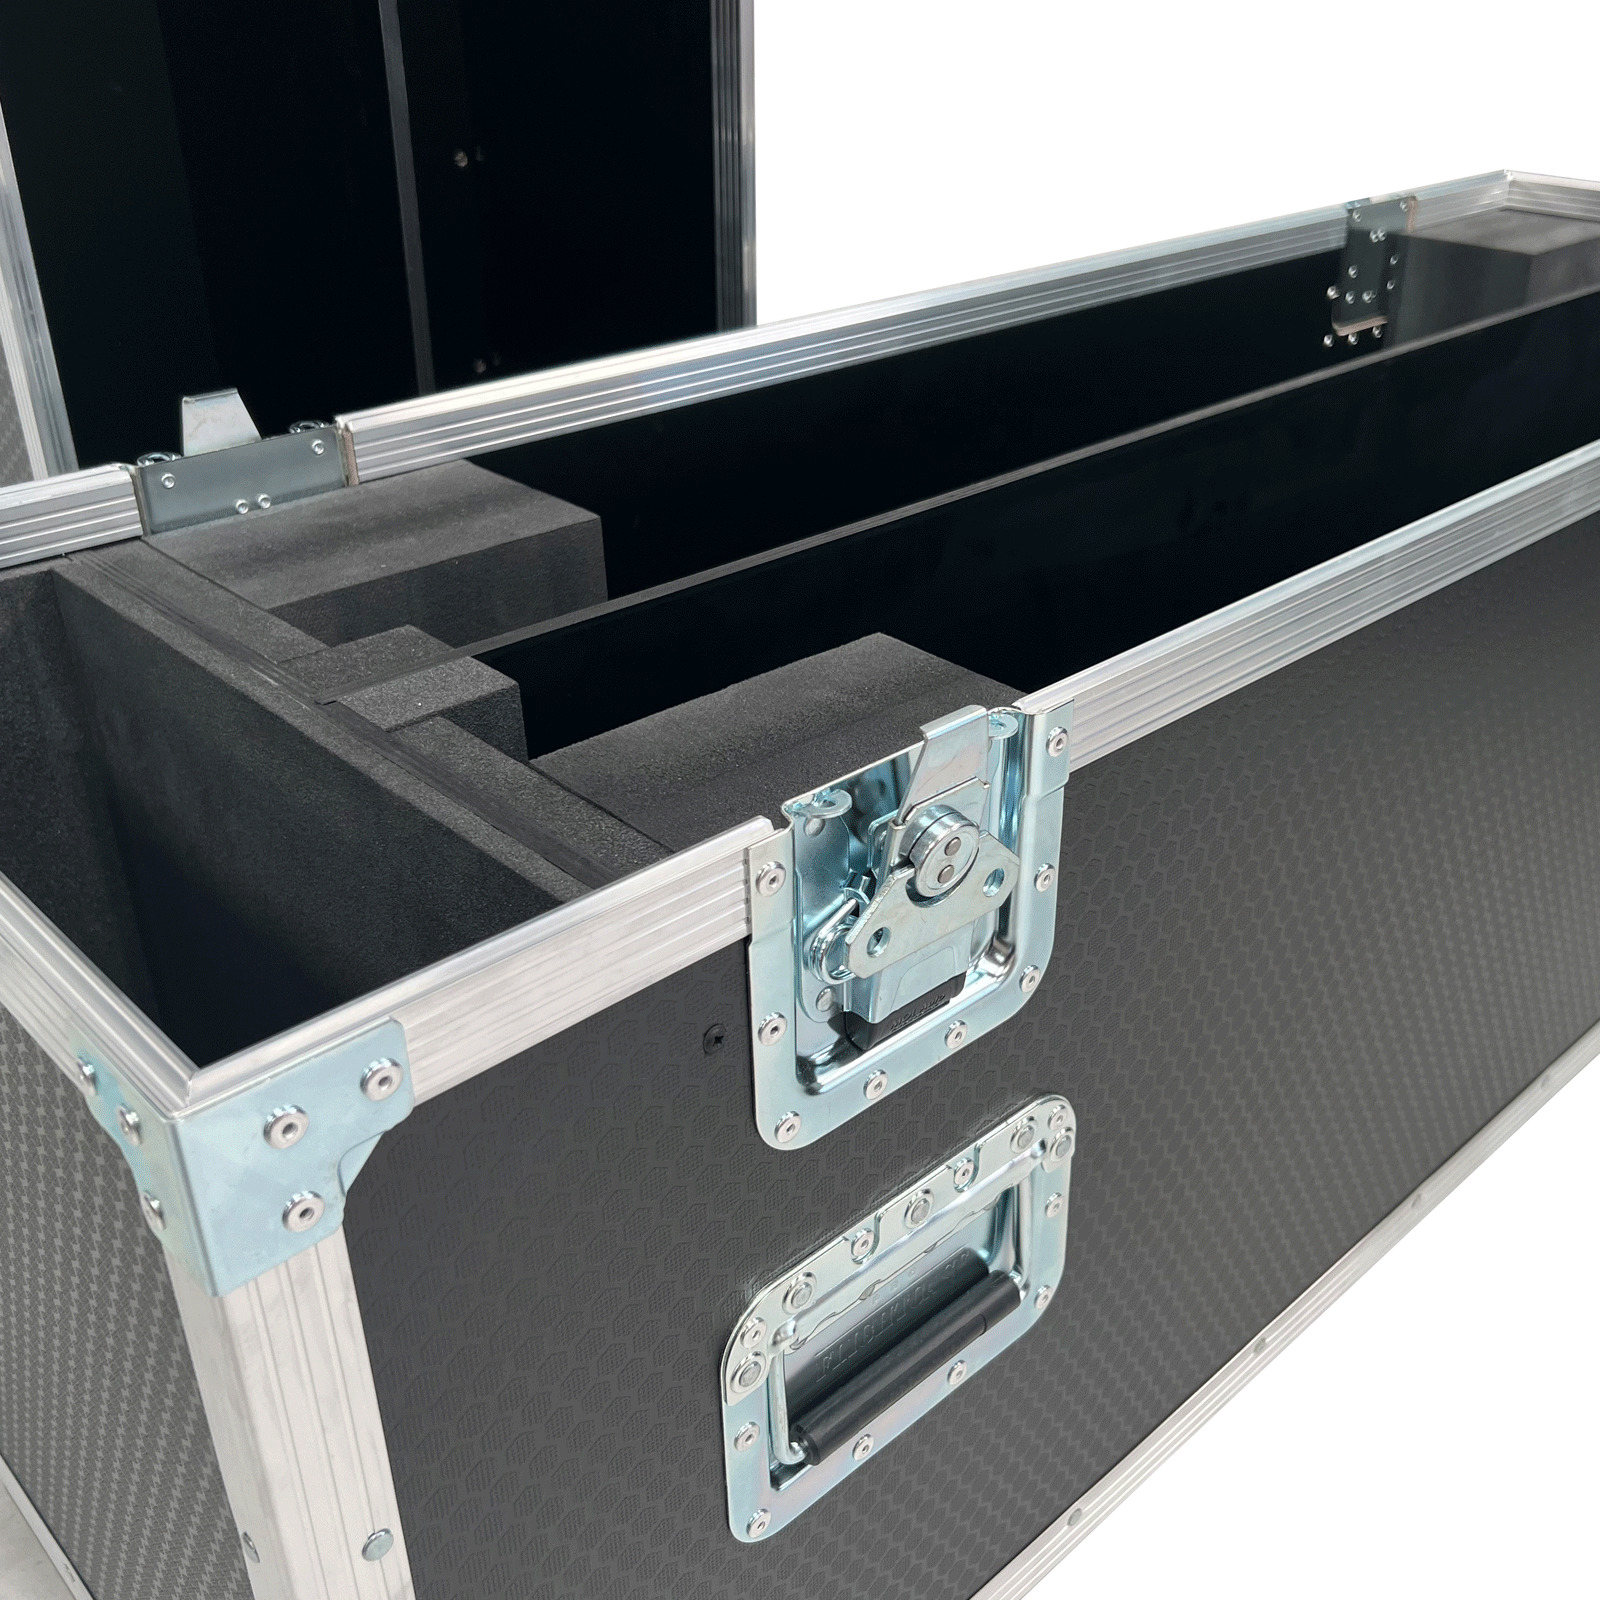 50 Plasma LCD TV Twin Flight Case for LG 52LD550 52